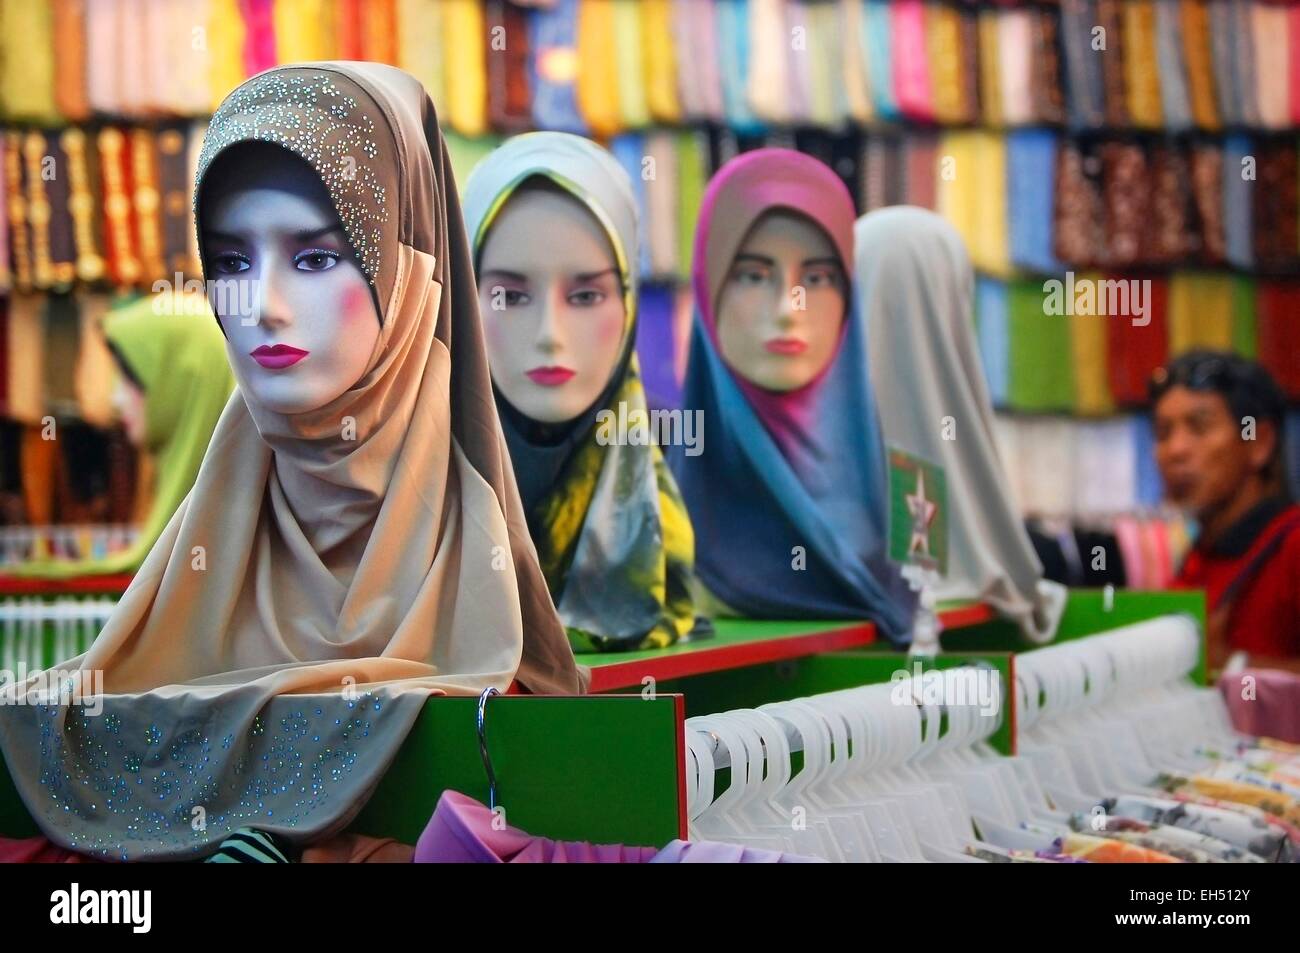 Malasia, Kuala Lumpur, velo islámico shop Foto de stock